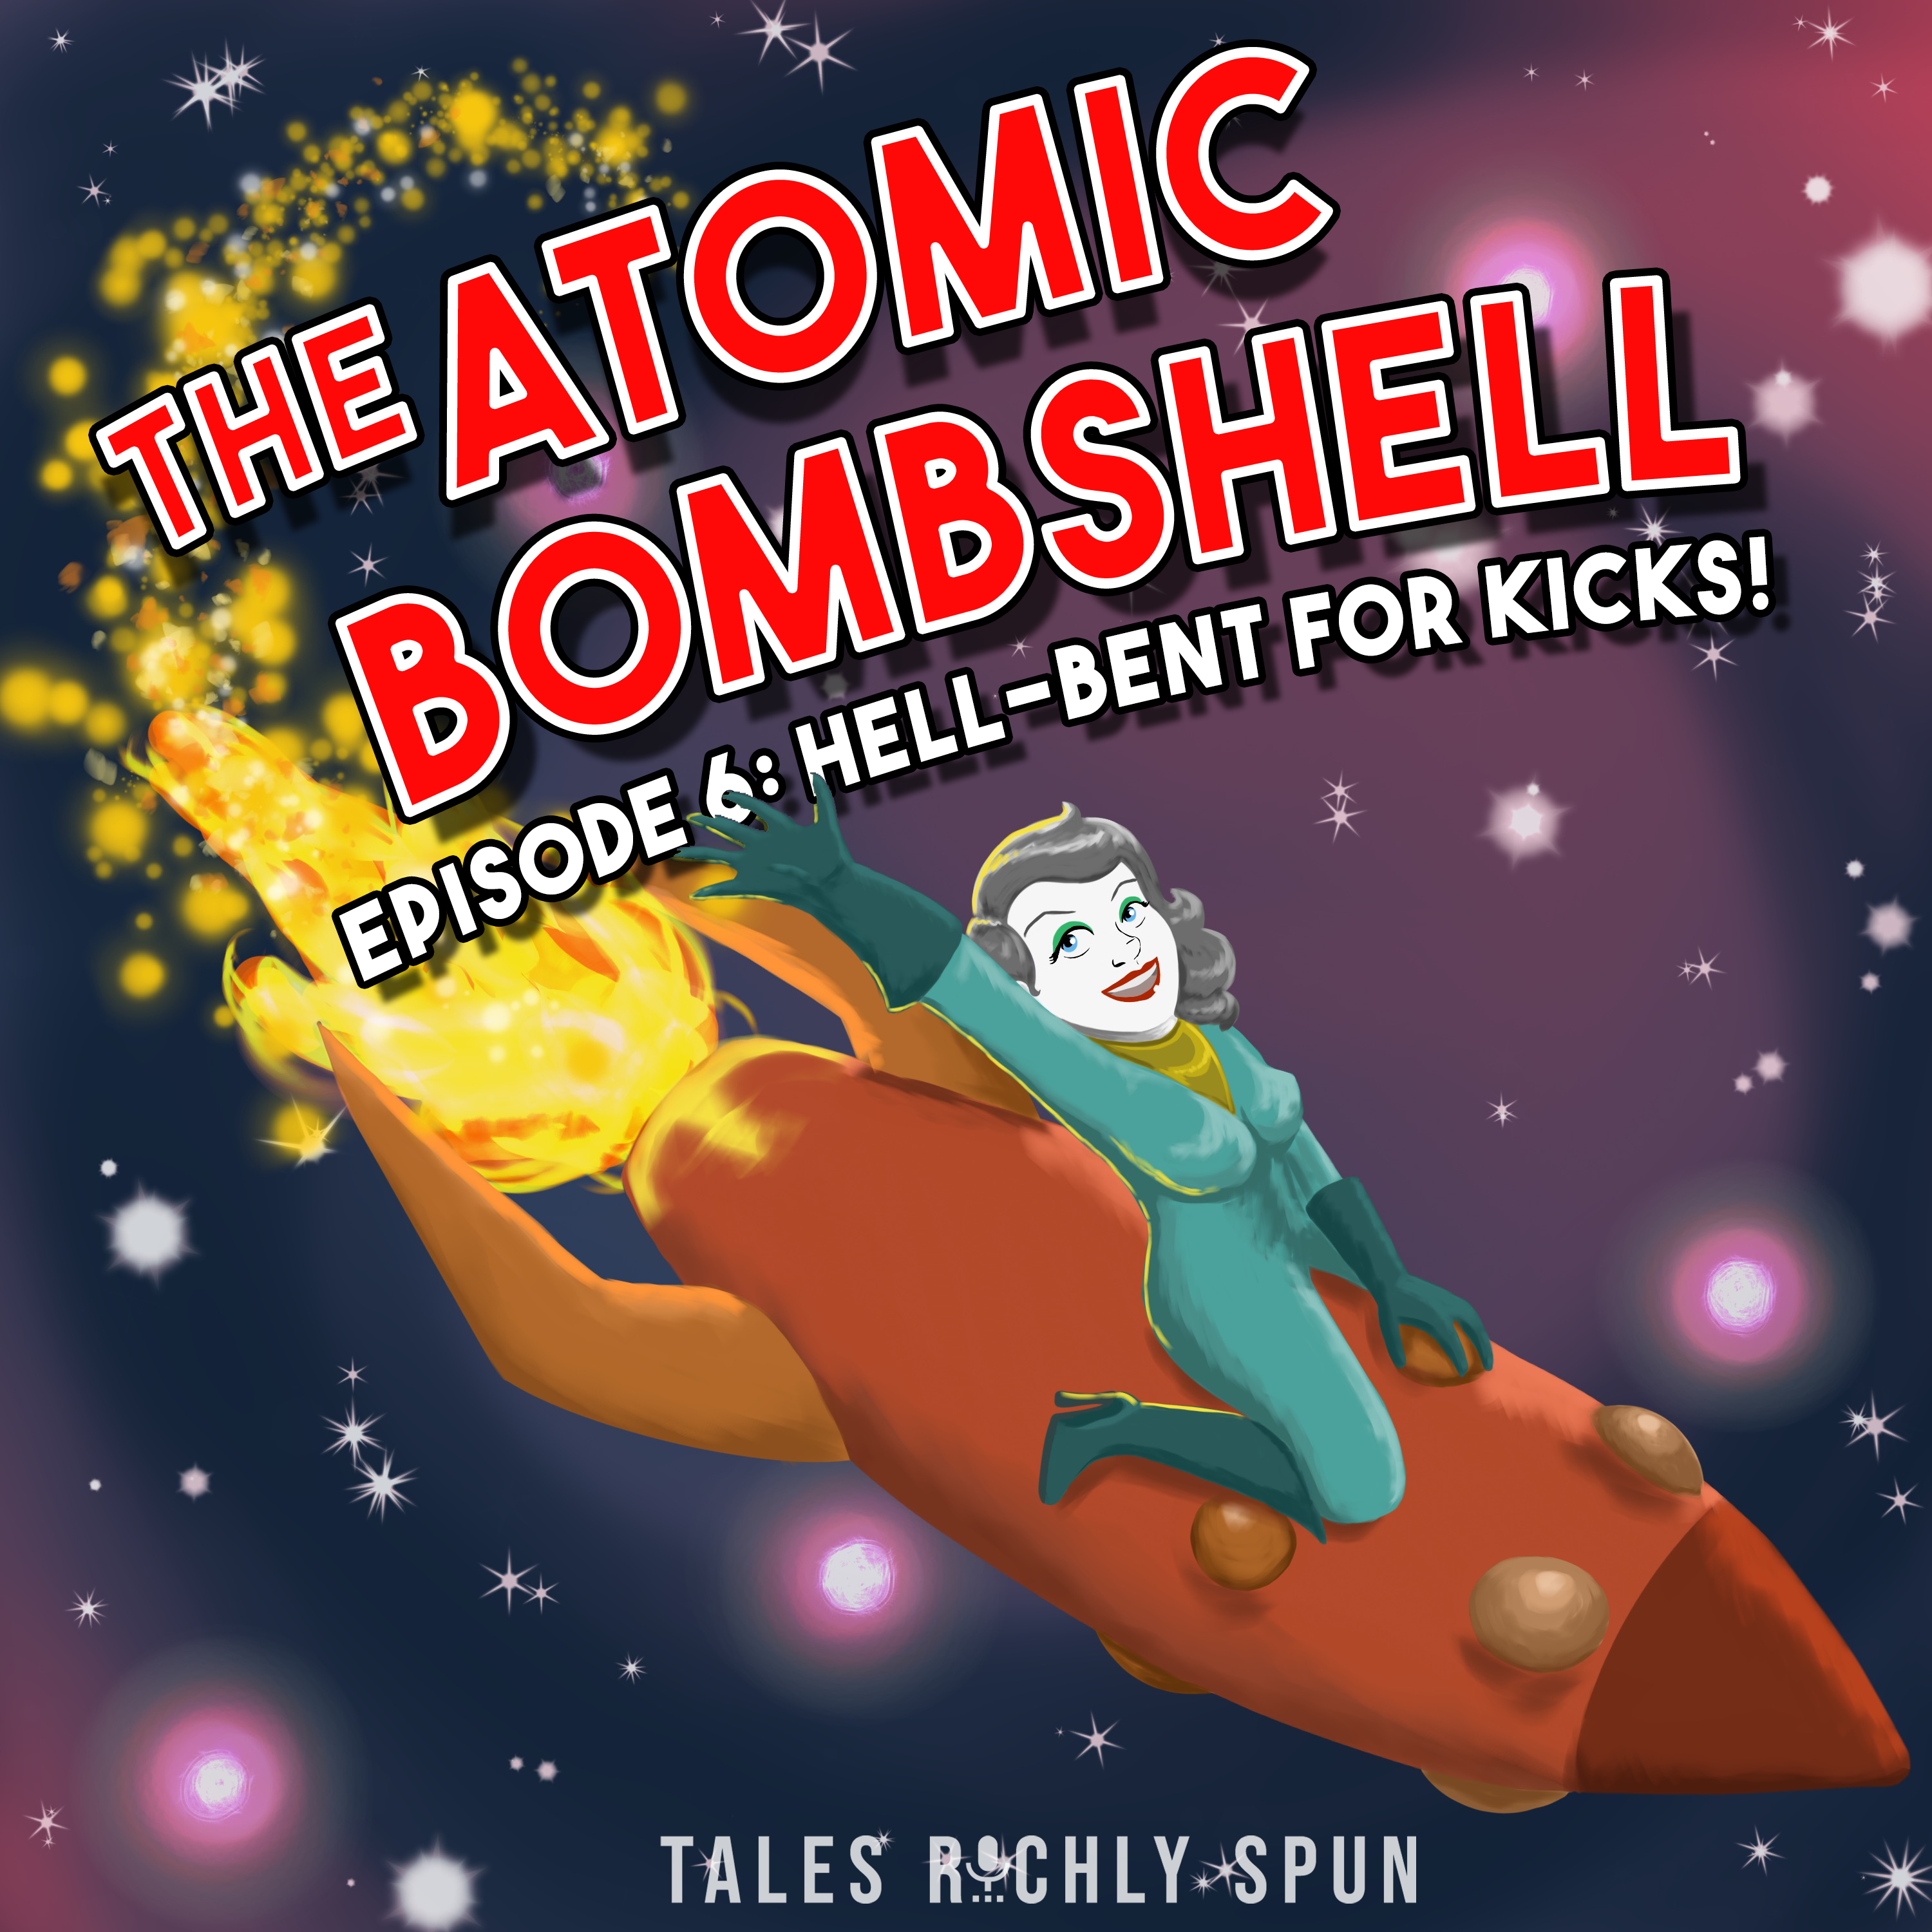 Episode 6: Hell-Bent For Kicks!